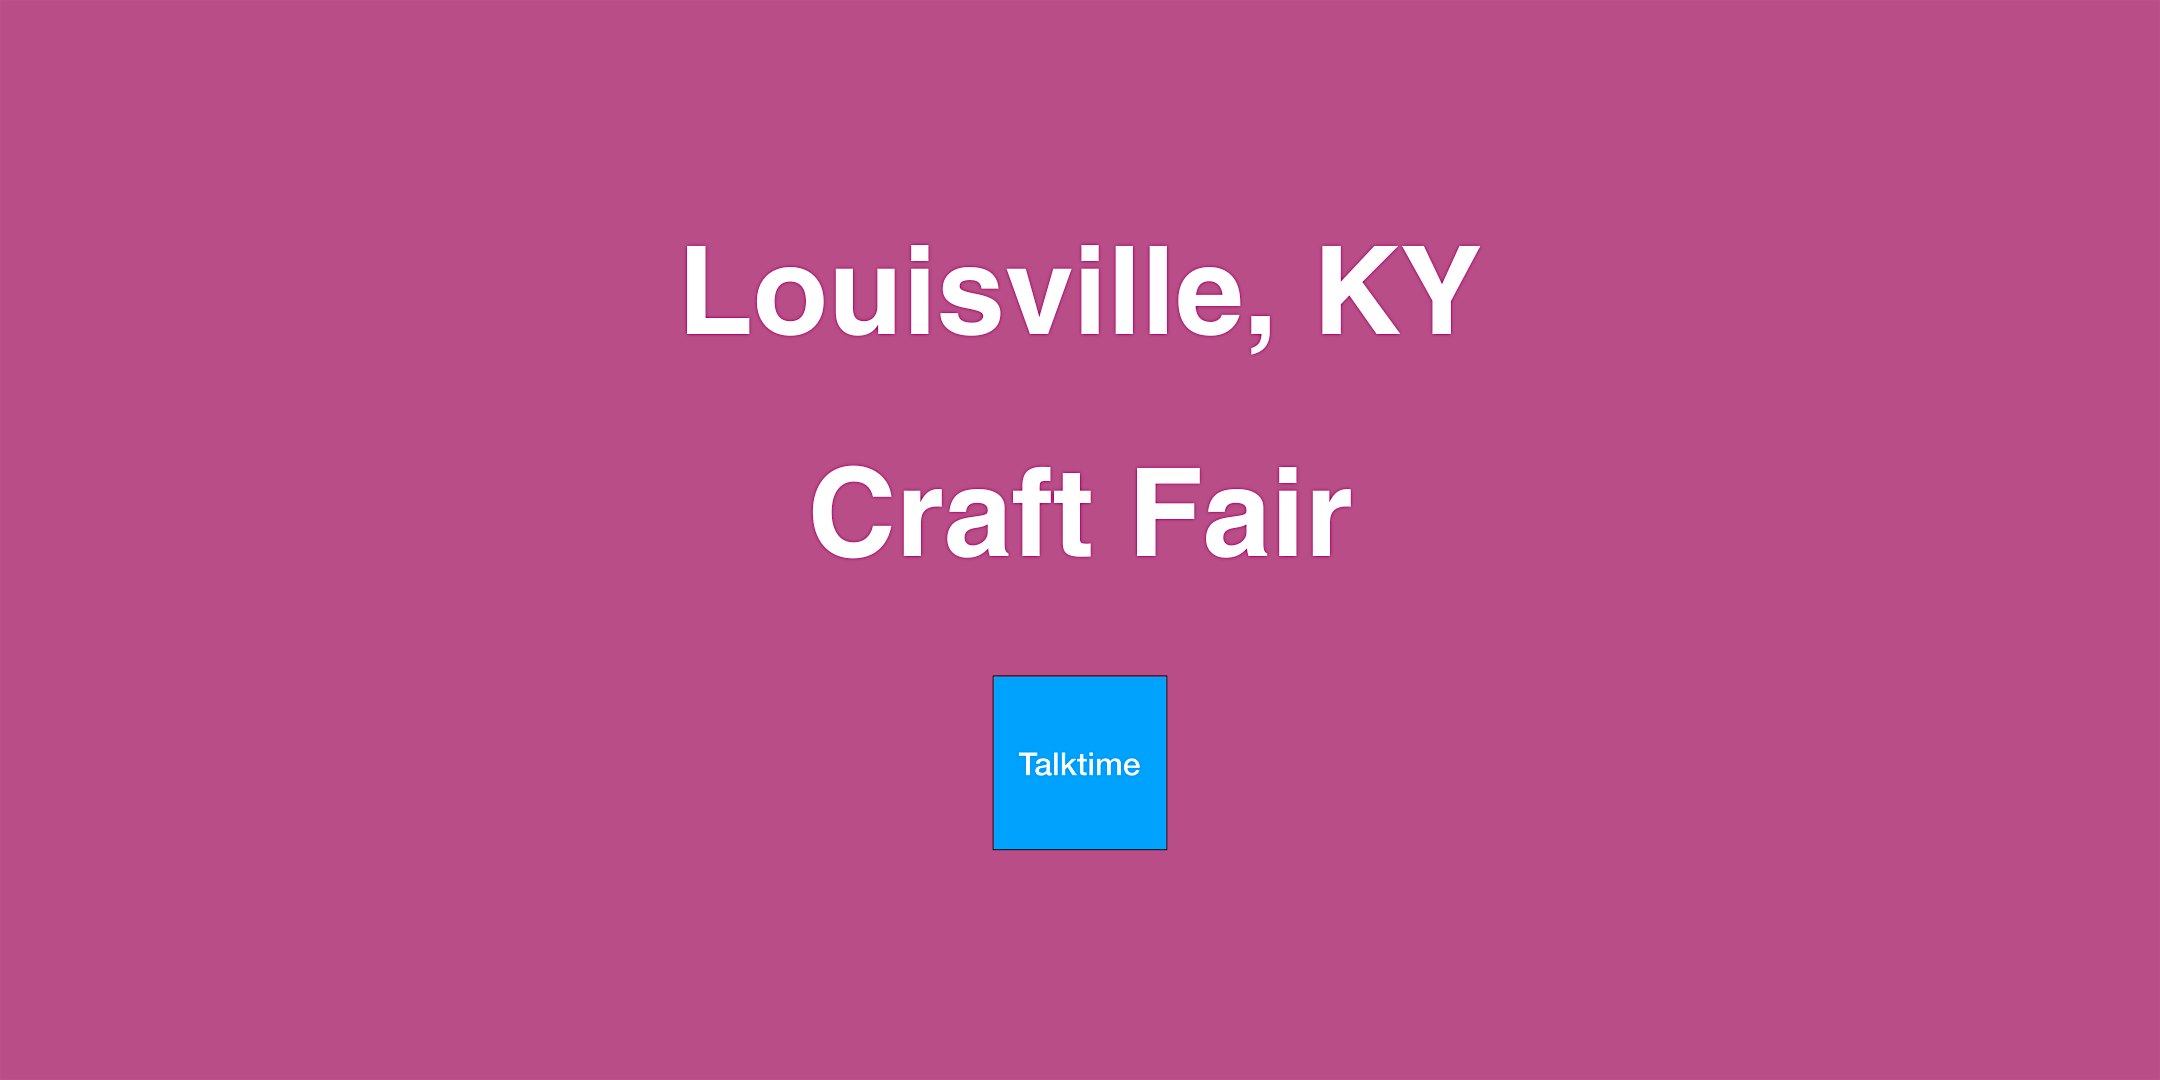 Craft Fair - Louisville